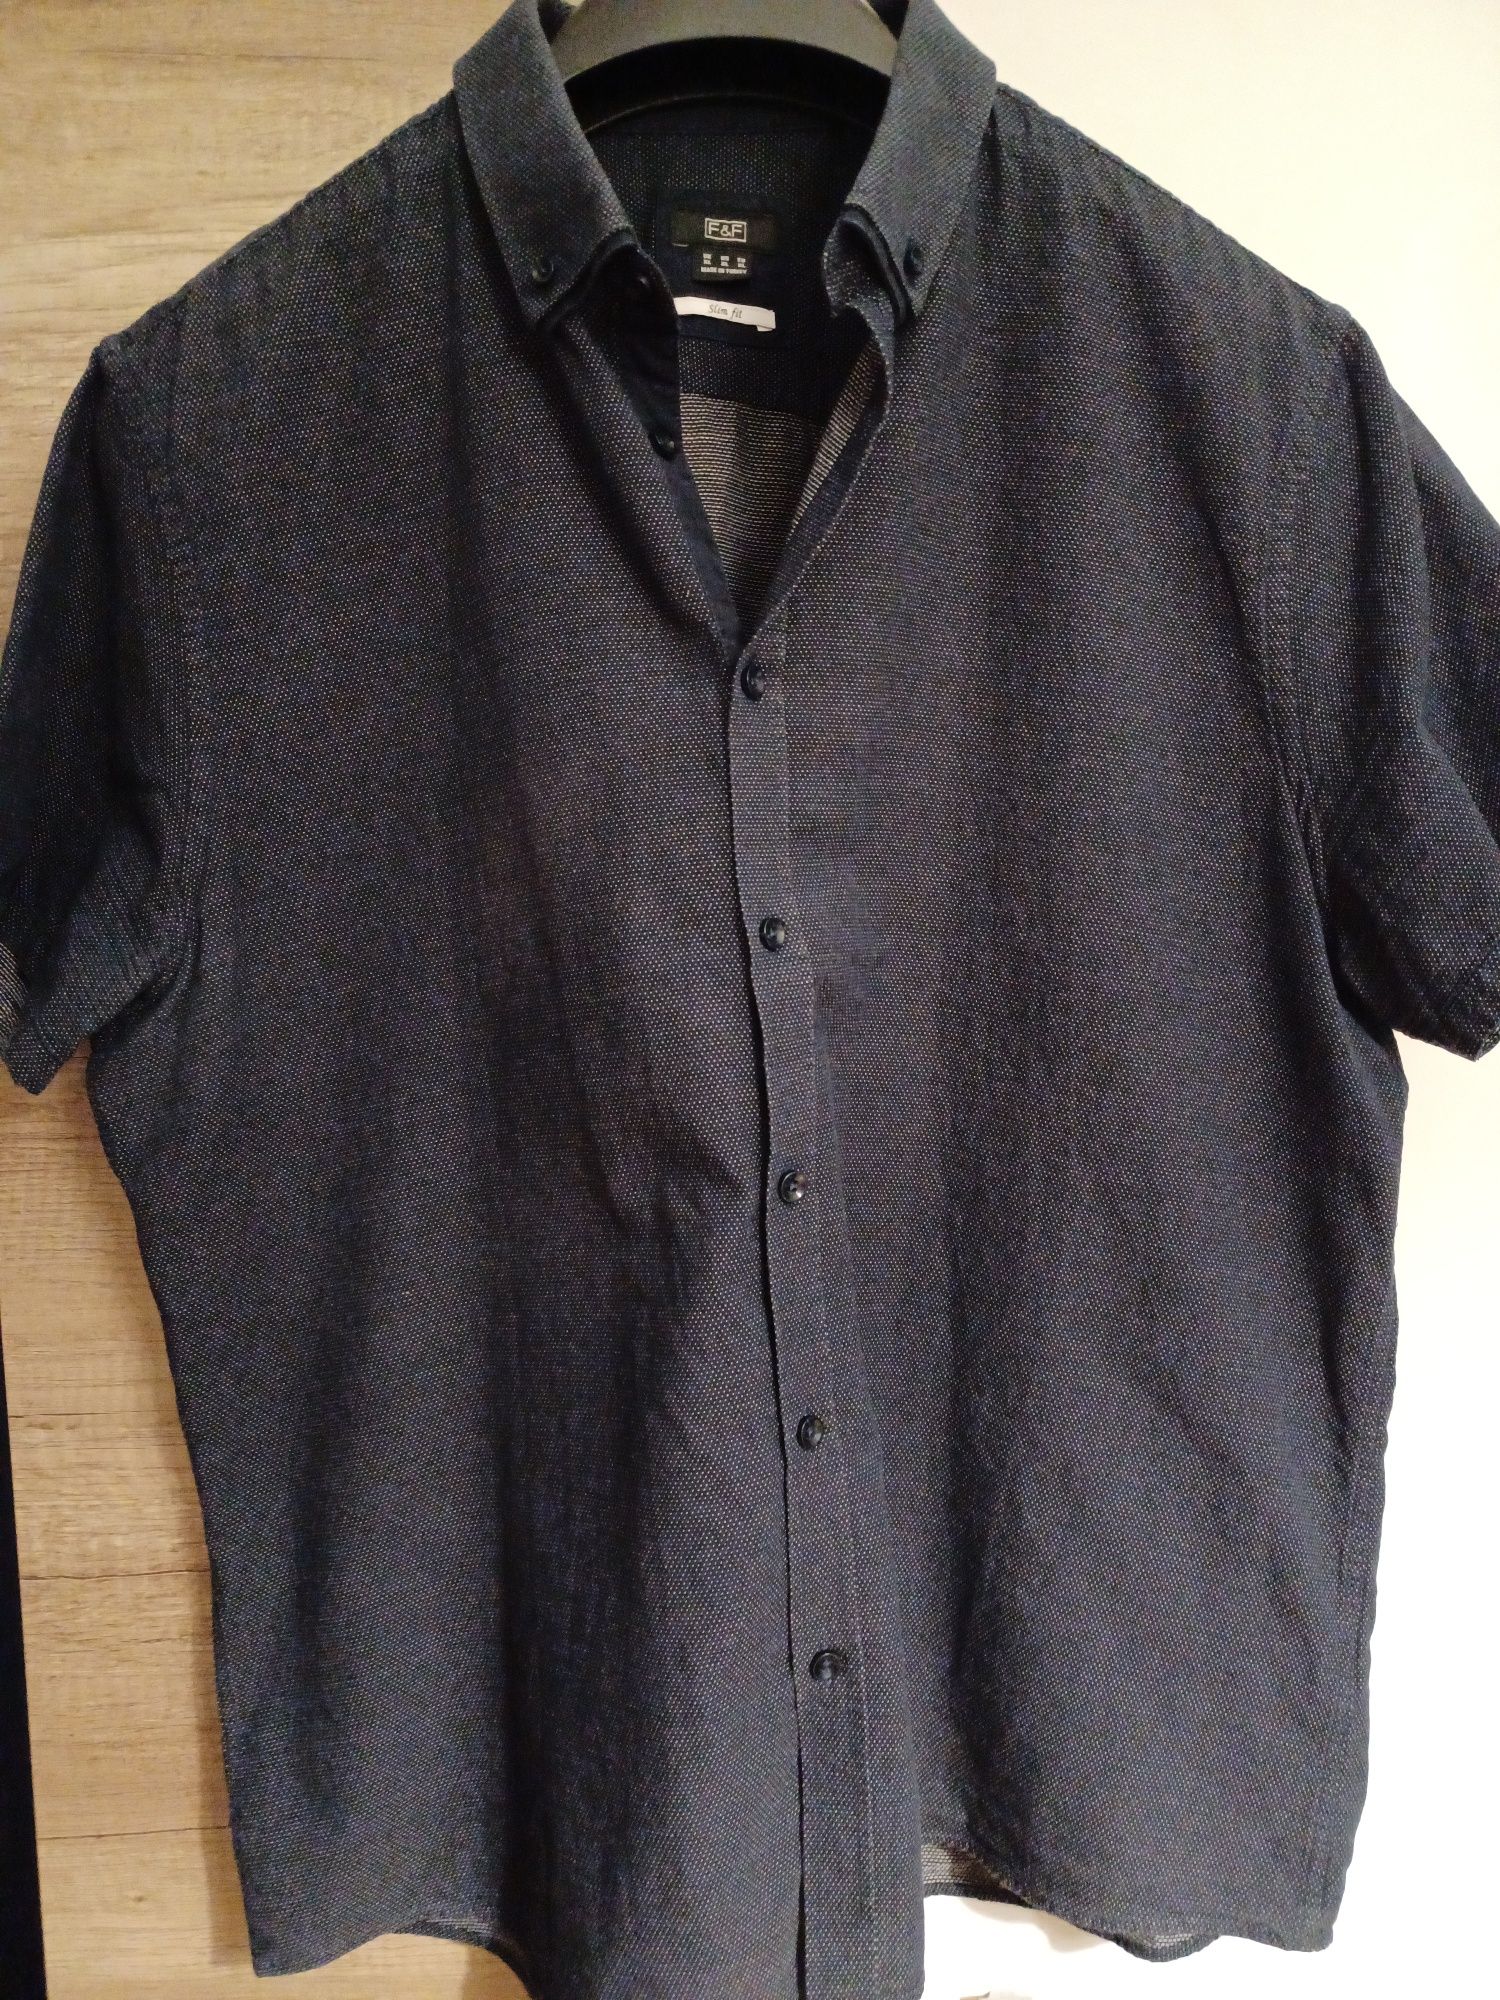 Granatowa koszula z krótkim rękawem męska rozmiar XL F&F Stan bdb